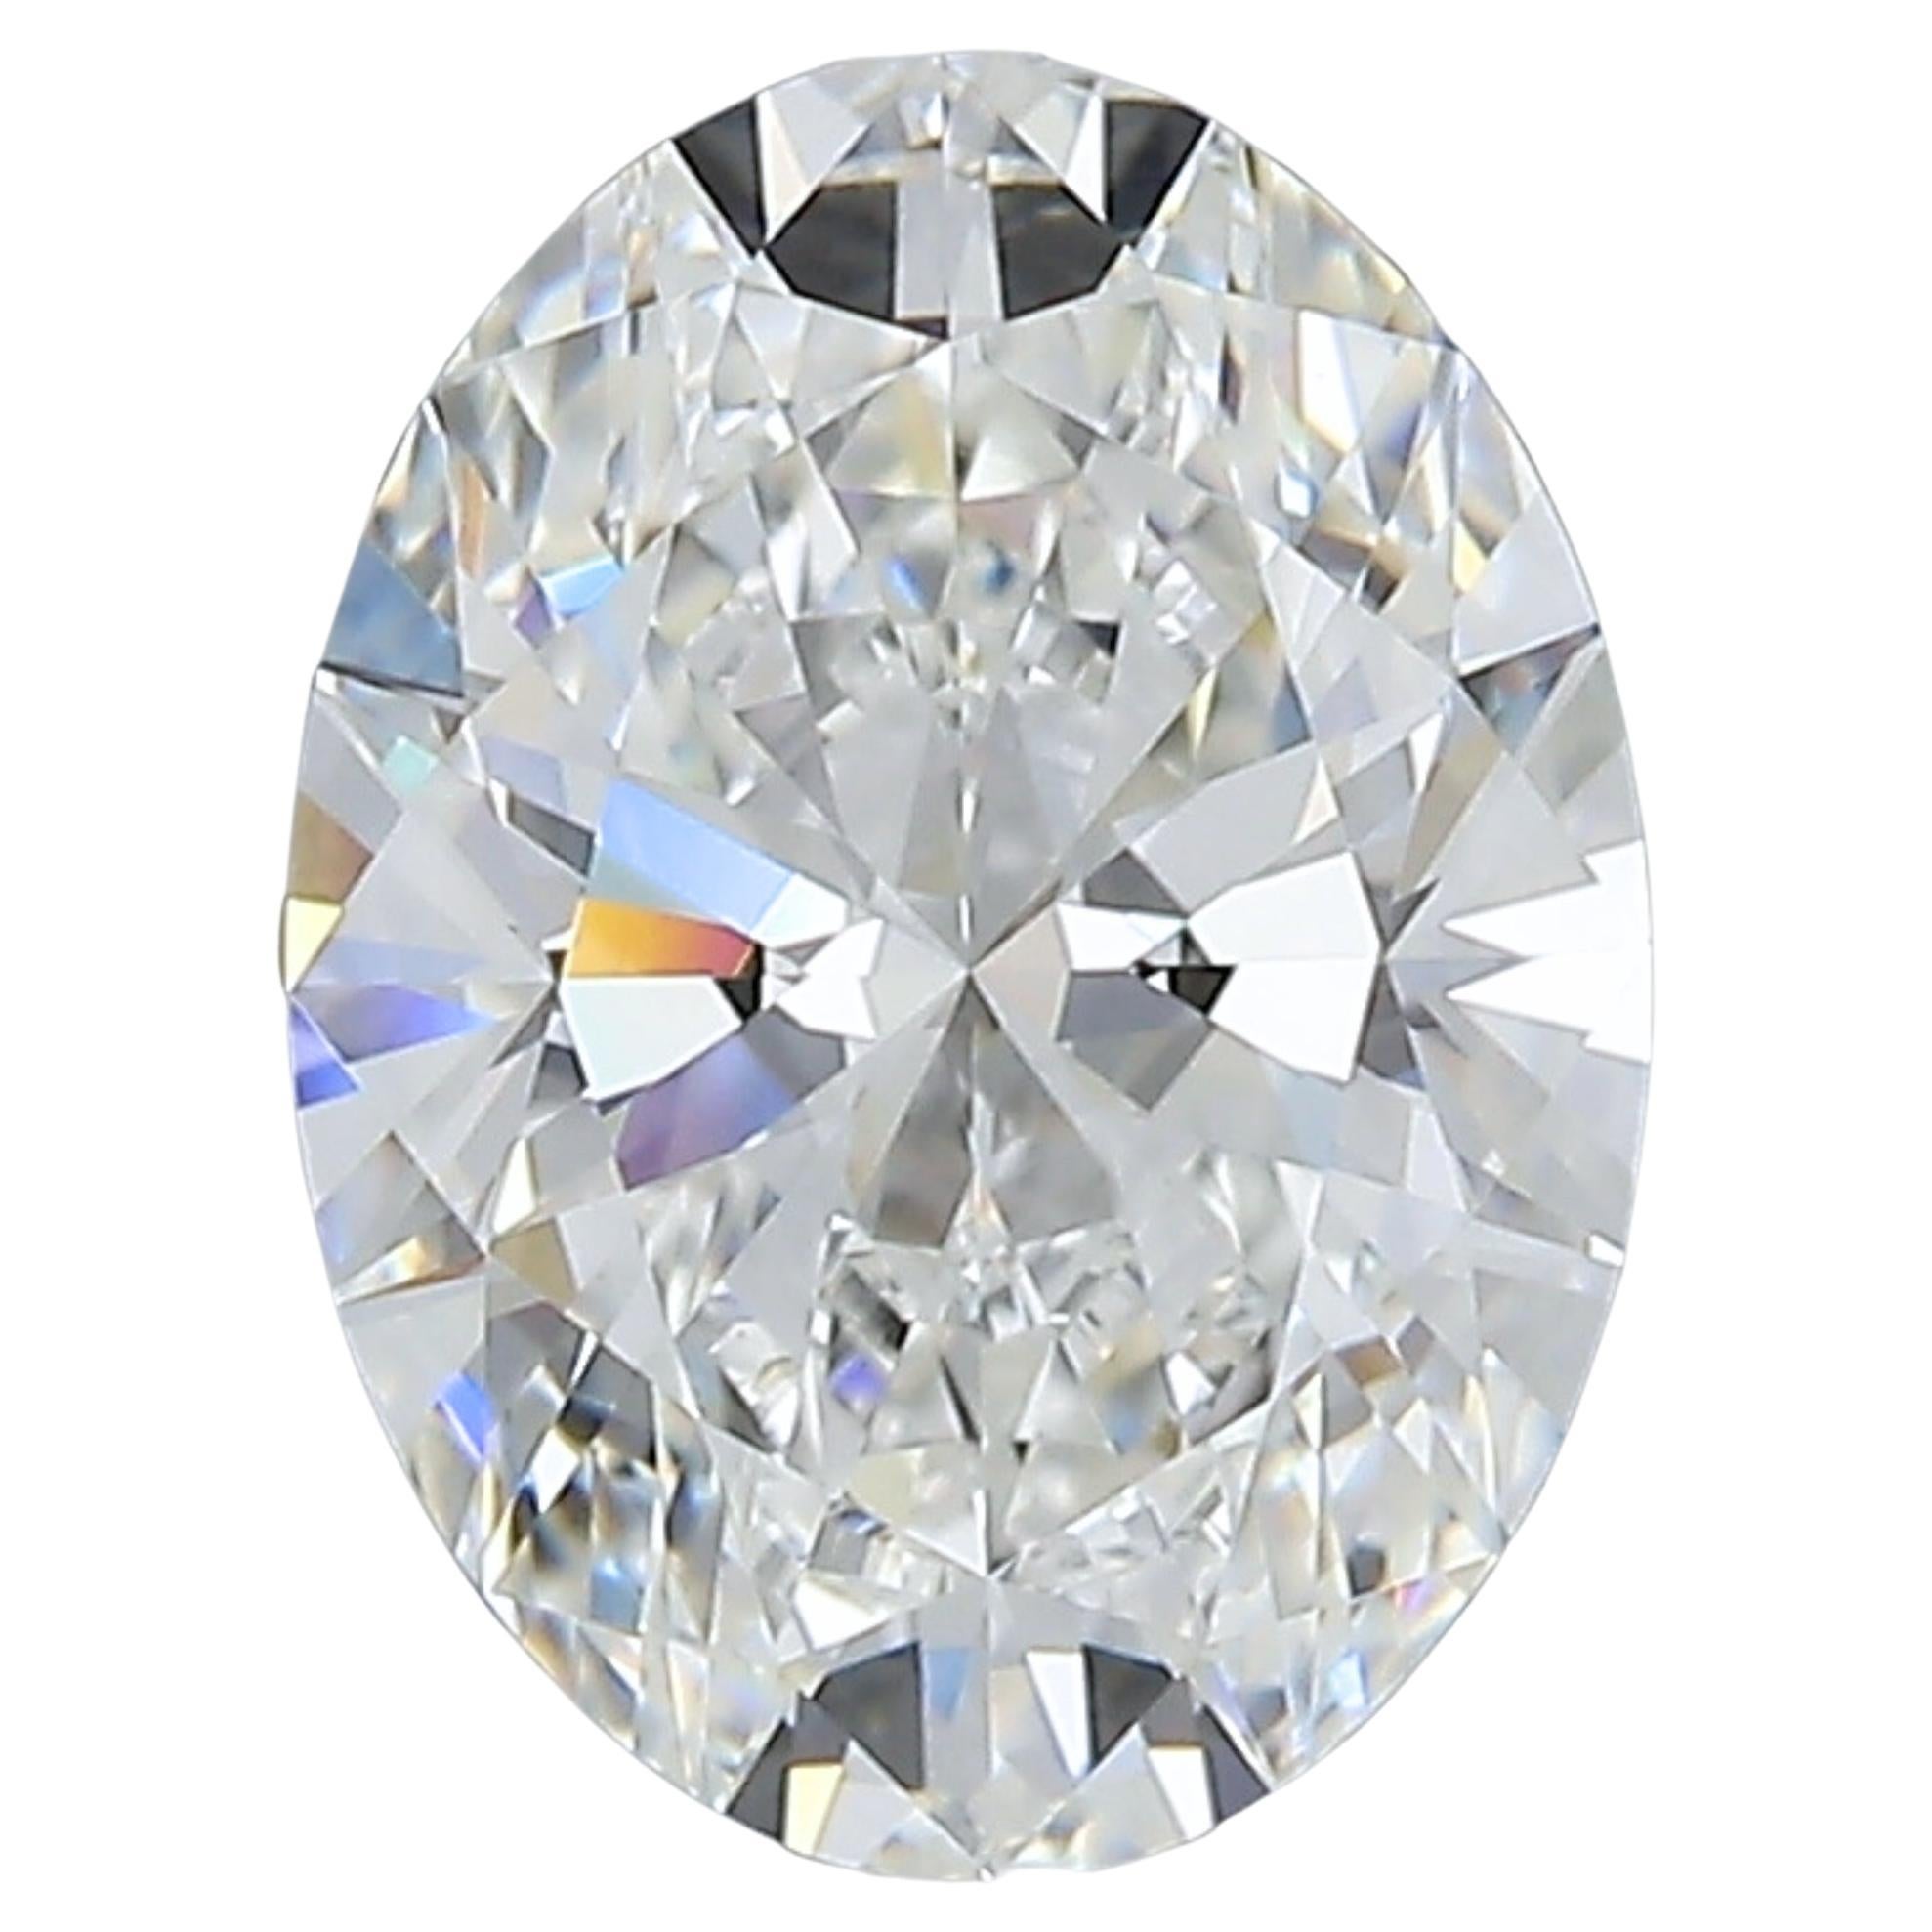 1pc Pretty Natural cut Oval diamond in a 1.73 carat